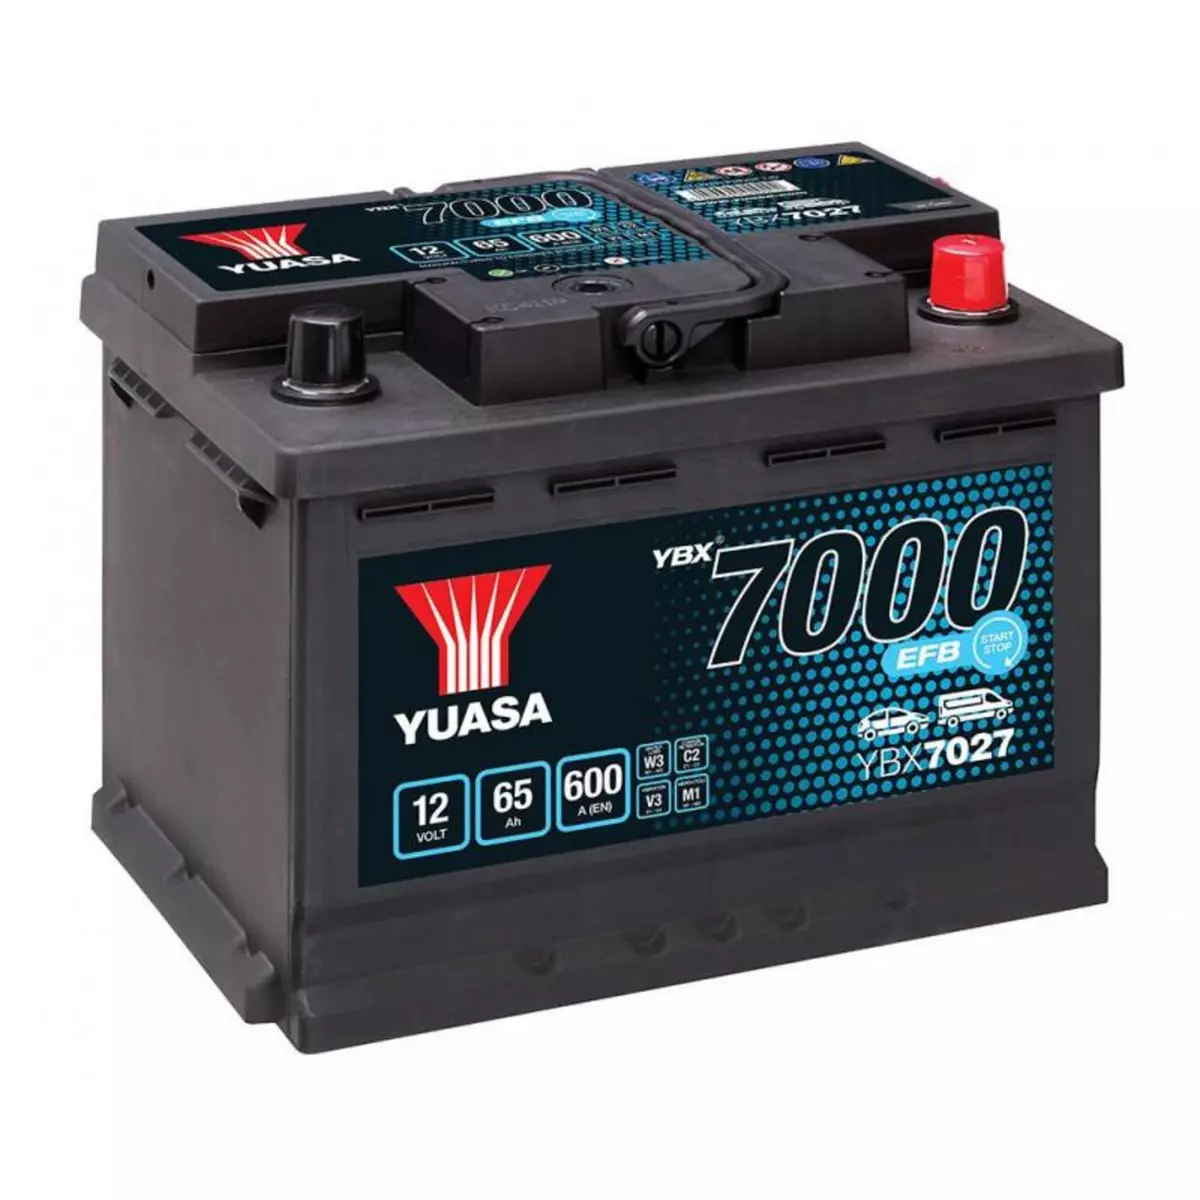 YUASA Batterie YUASA YBX7027 EFB 12V 65AH 600A L2D